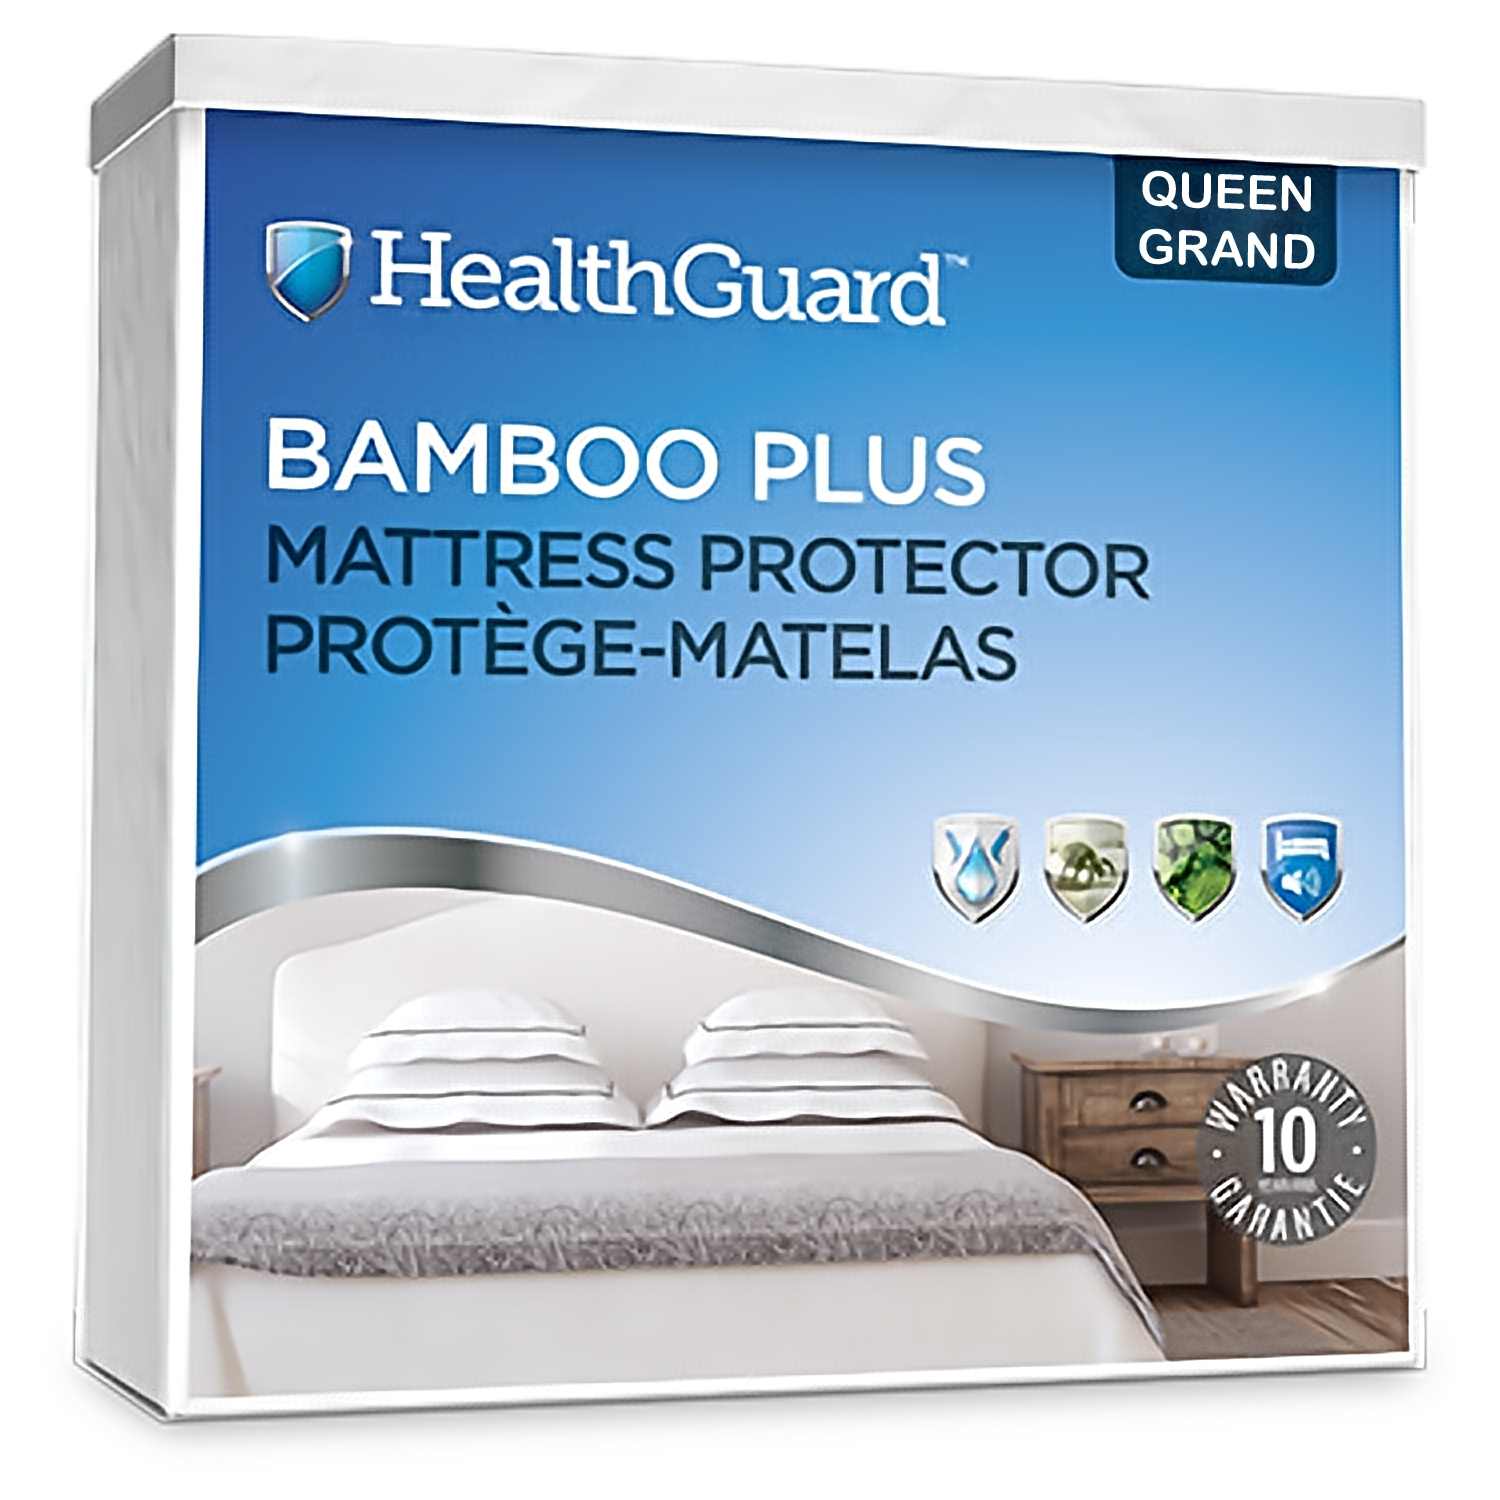 Health Guard Bamboo Plus Mattress Protector - Queen